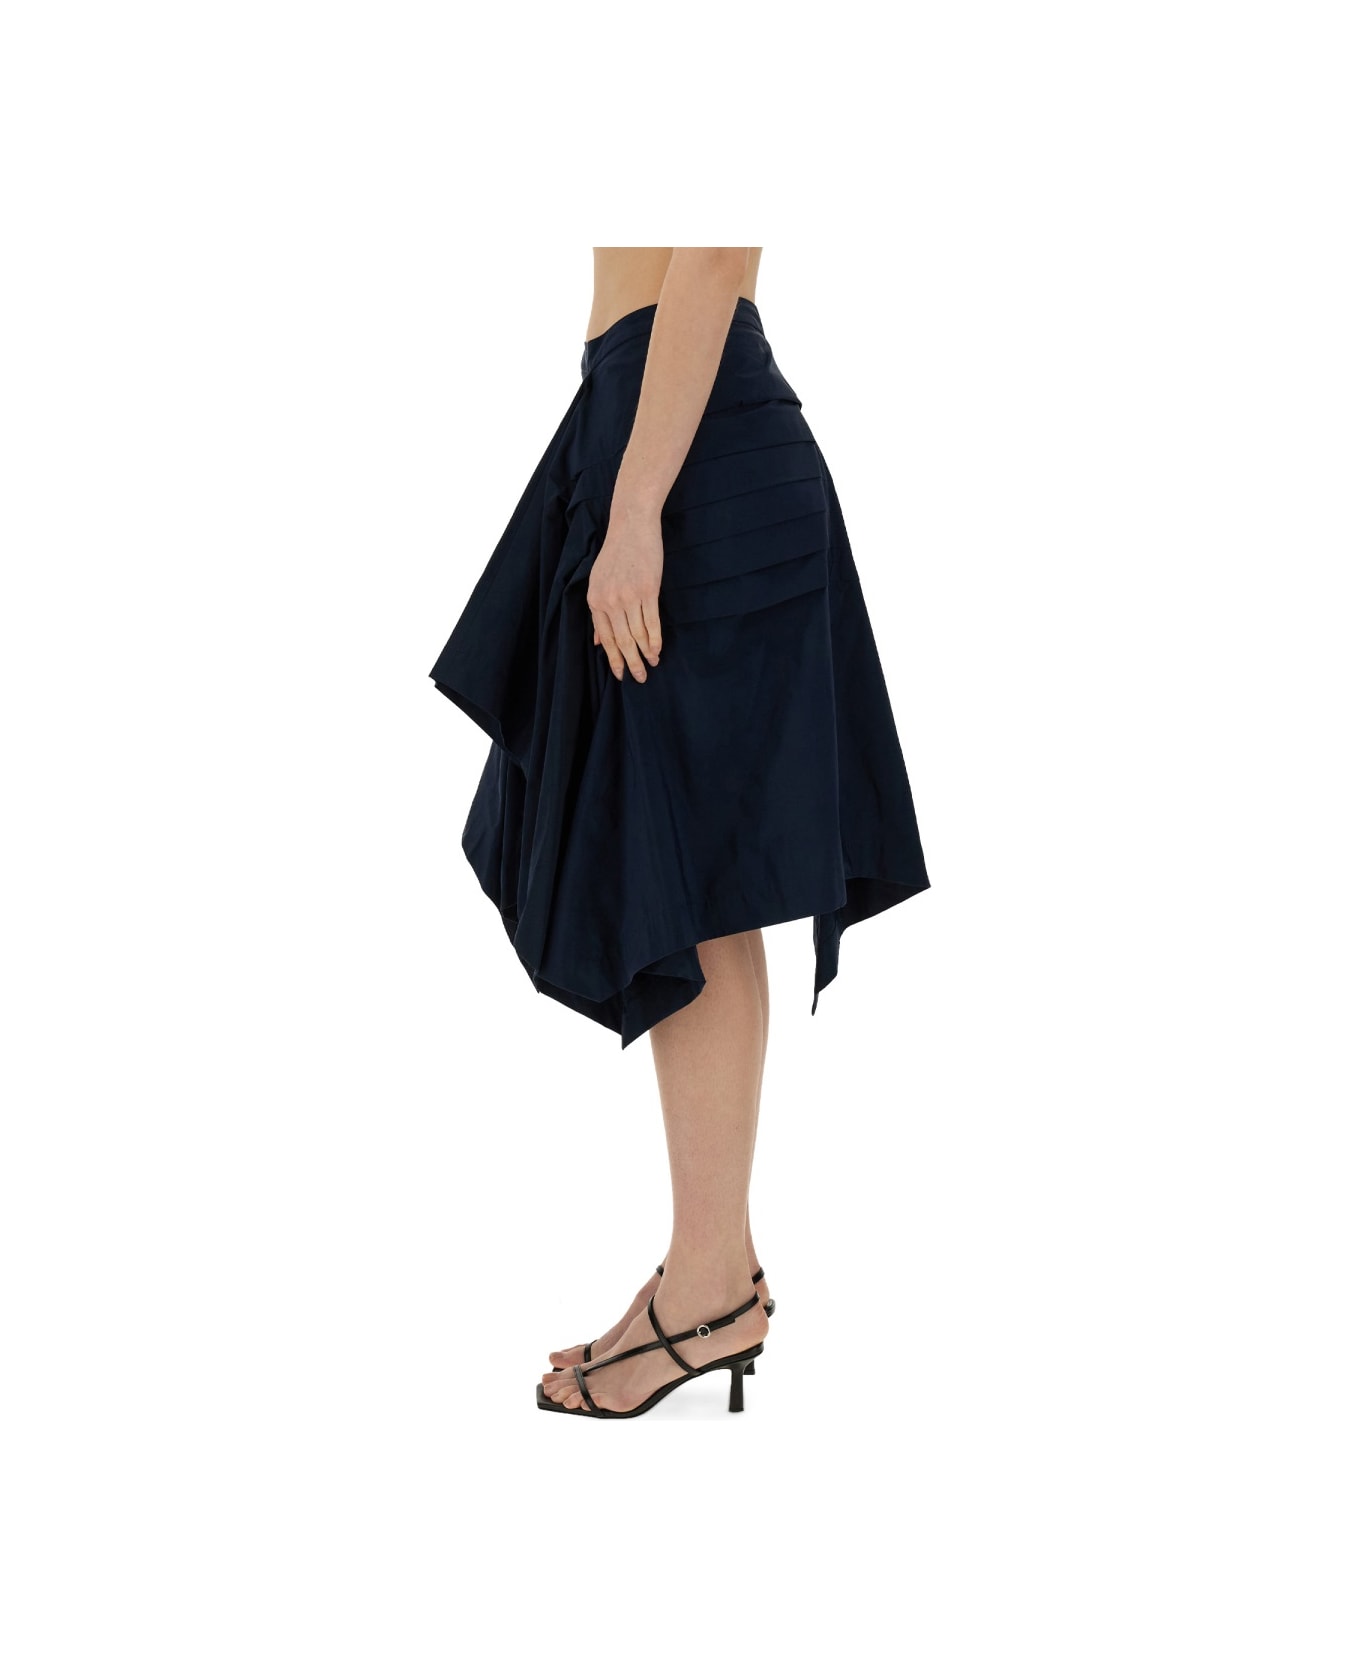 Dries Van Noten Deconstructed Skirt - BLUE